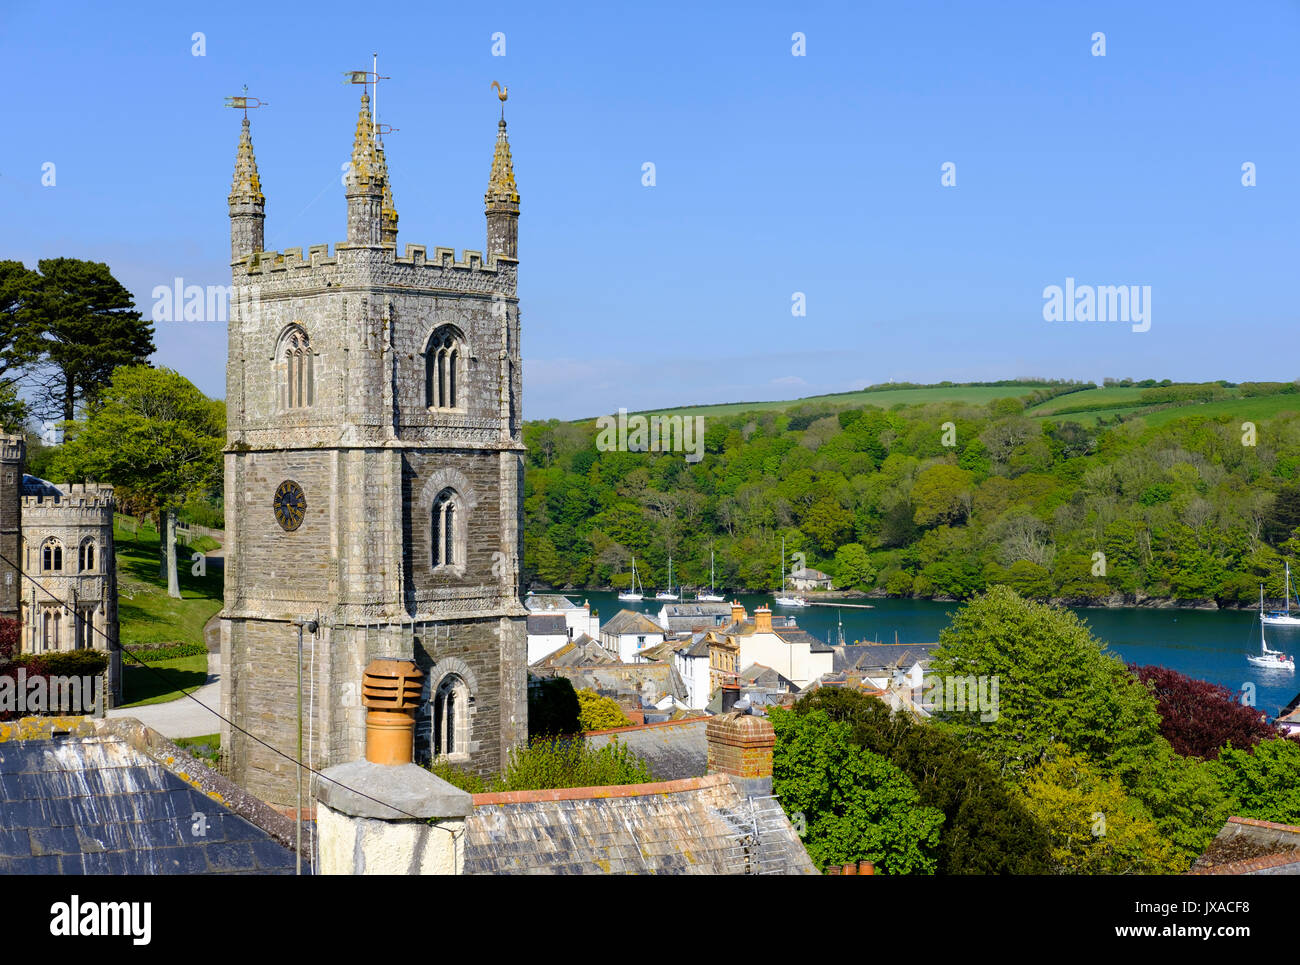 La torre de la iglesia de St Fimbarrus iglesia parroquial, Fowey, Cornwall, Inglaterra, Reino Unido Foto de stock